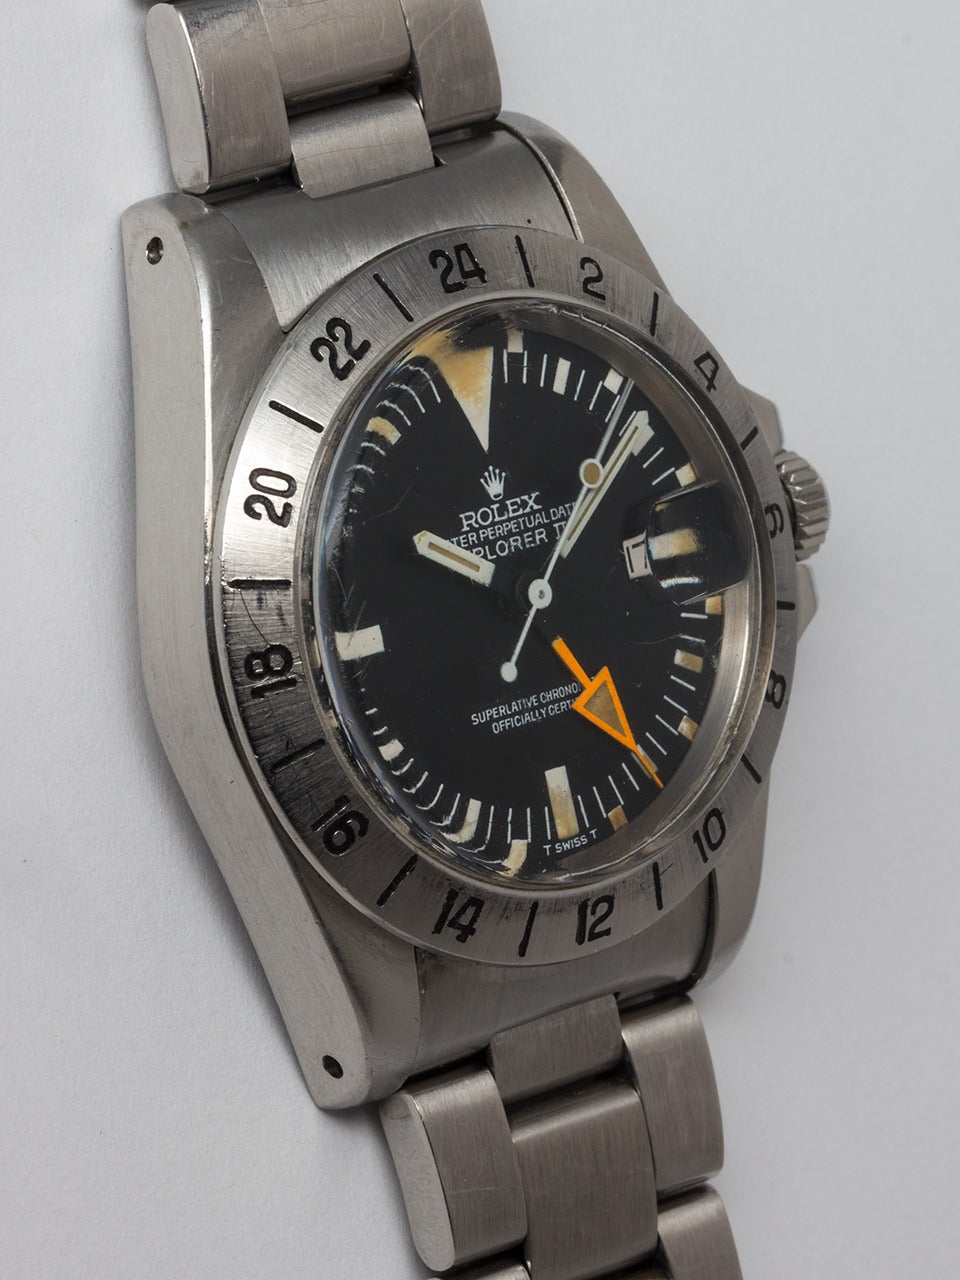 Rolex Stainless Steel Explorer II Wristwatch ref 1655 serial #5.4 million circa 1978. So called 